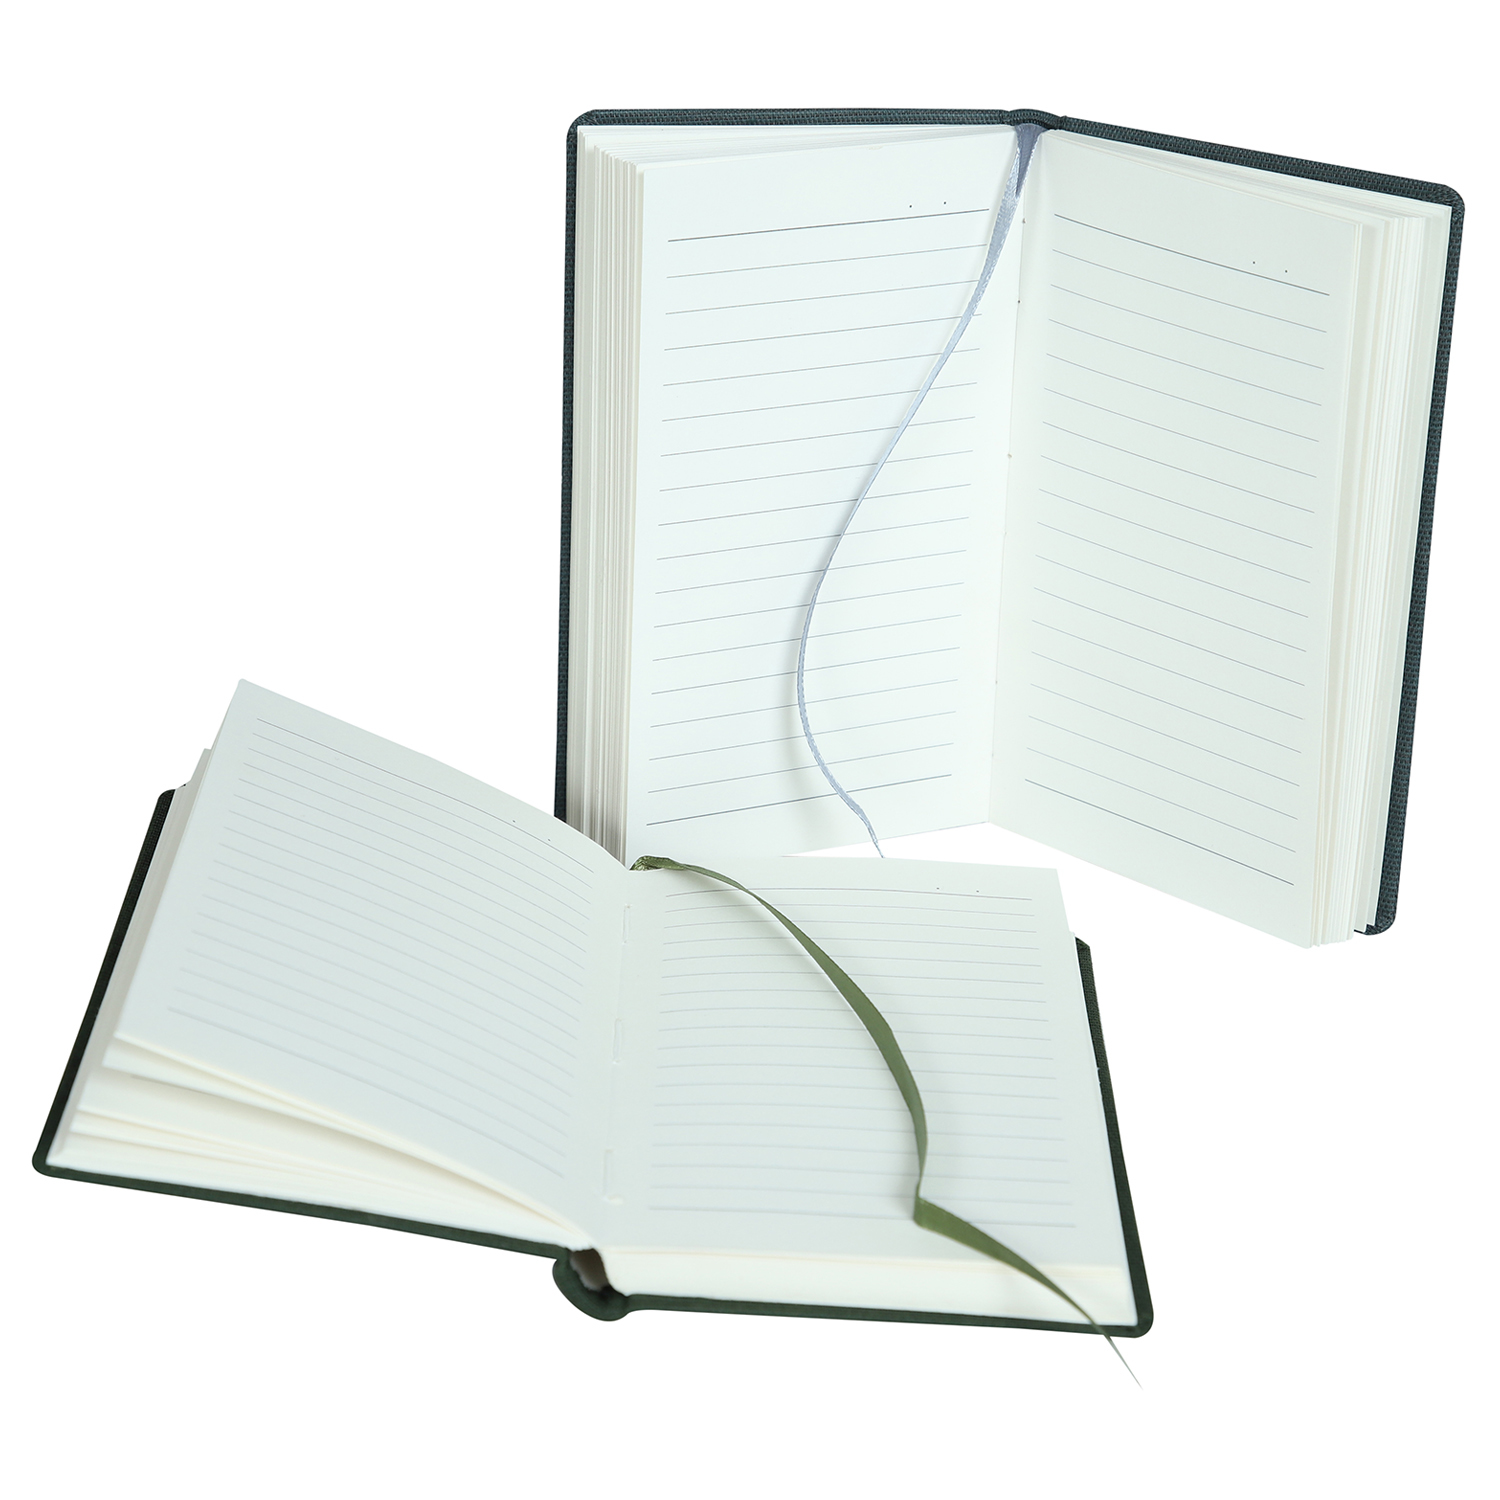 Comma Regina - A6 Size - Hard Bound Notebook (Dark Green and Grey)